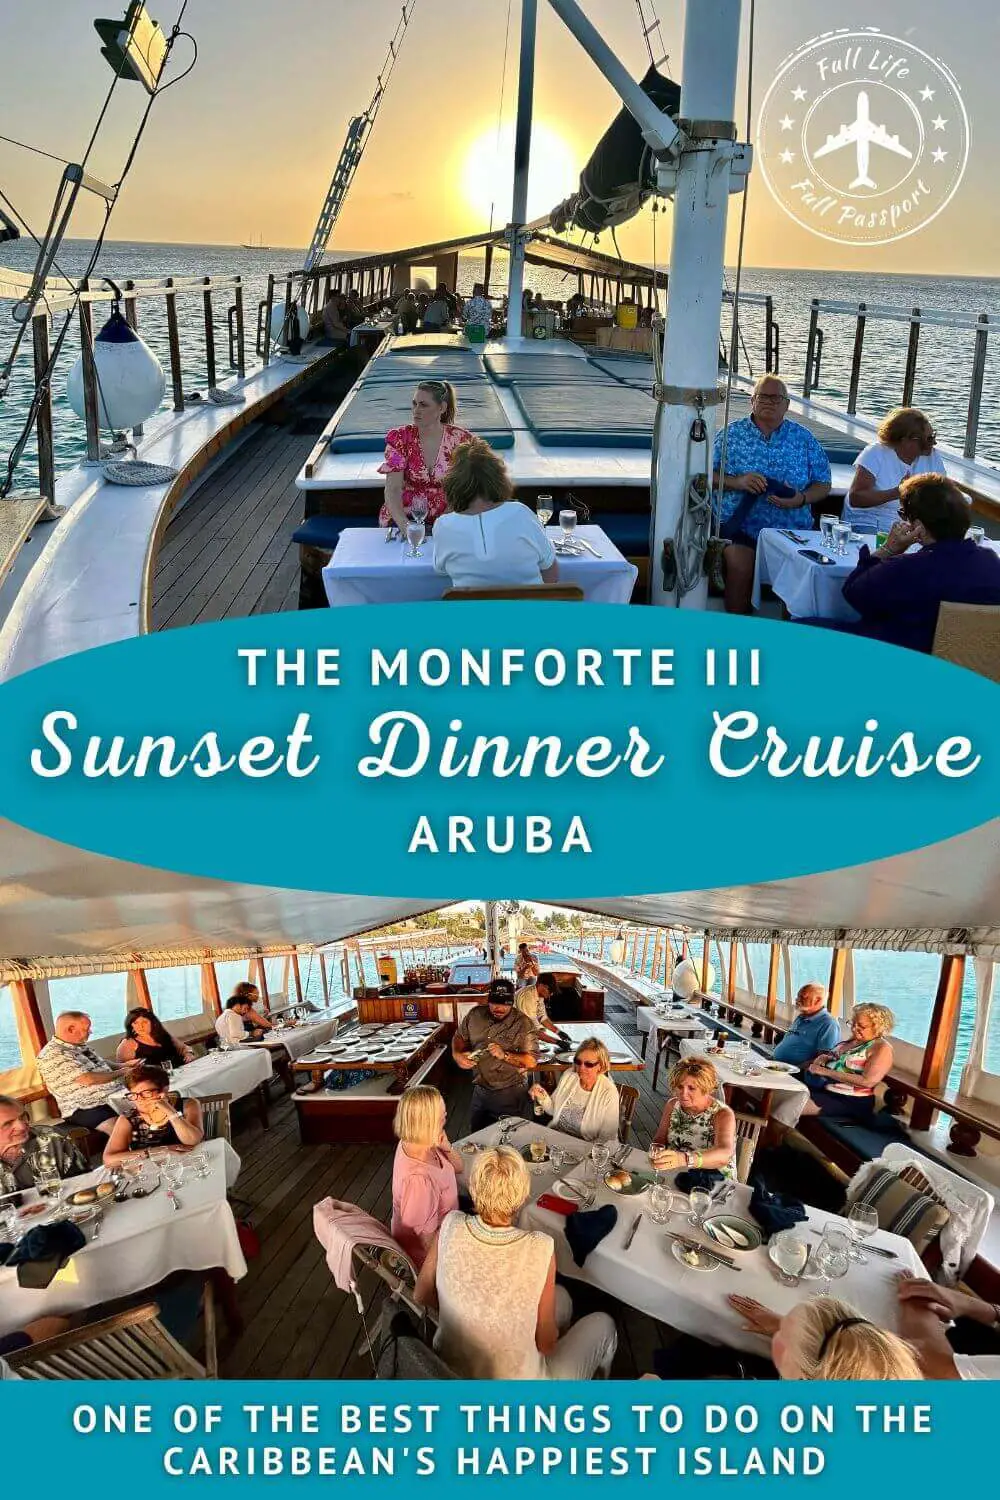 Worth the Splurge: An Aruba Sunset Dinner Cruise